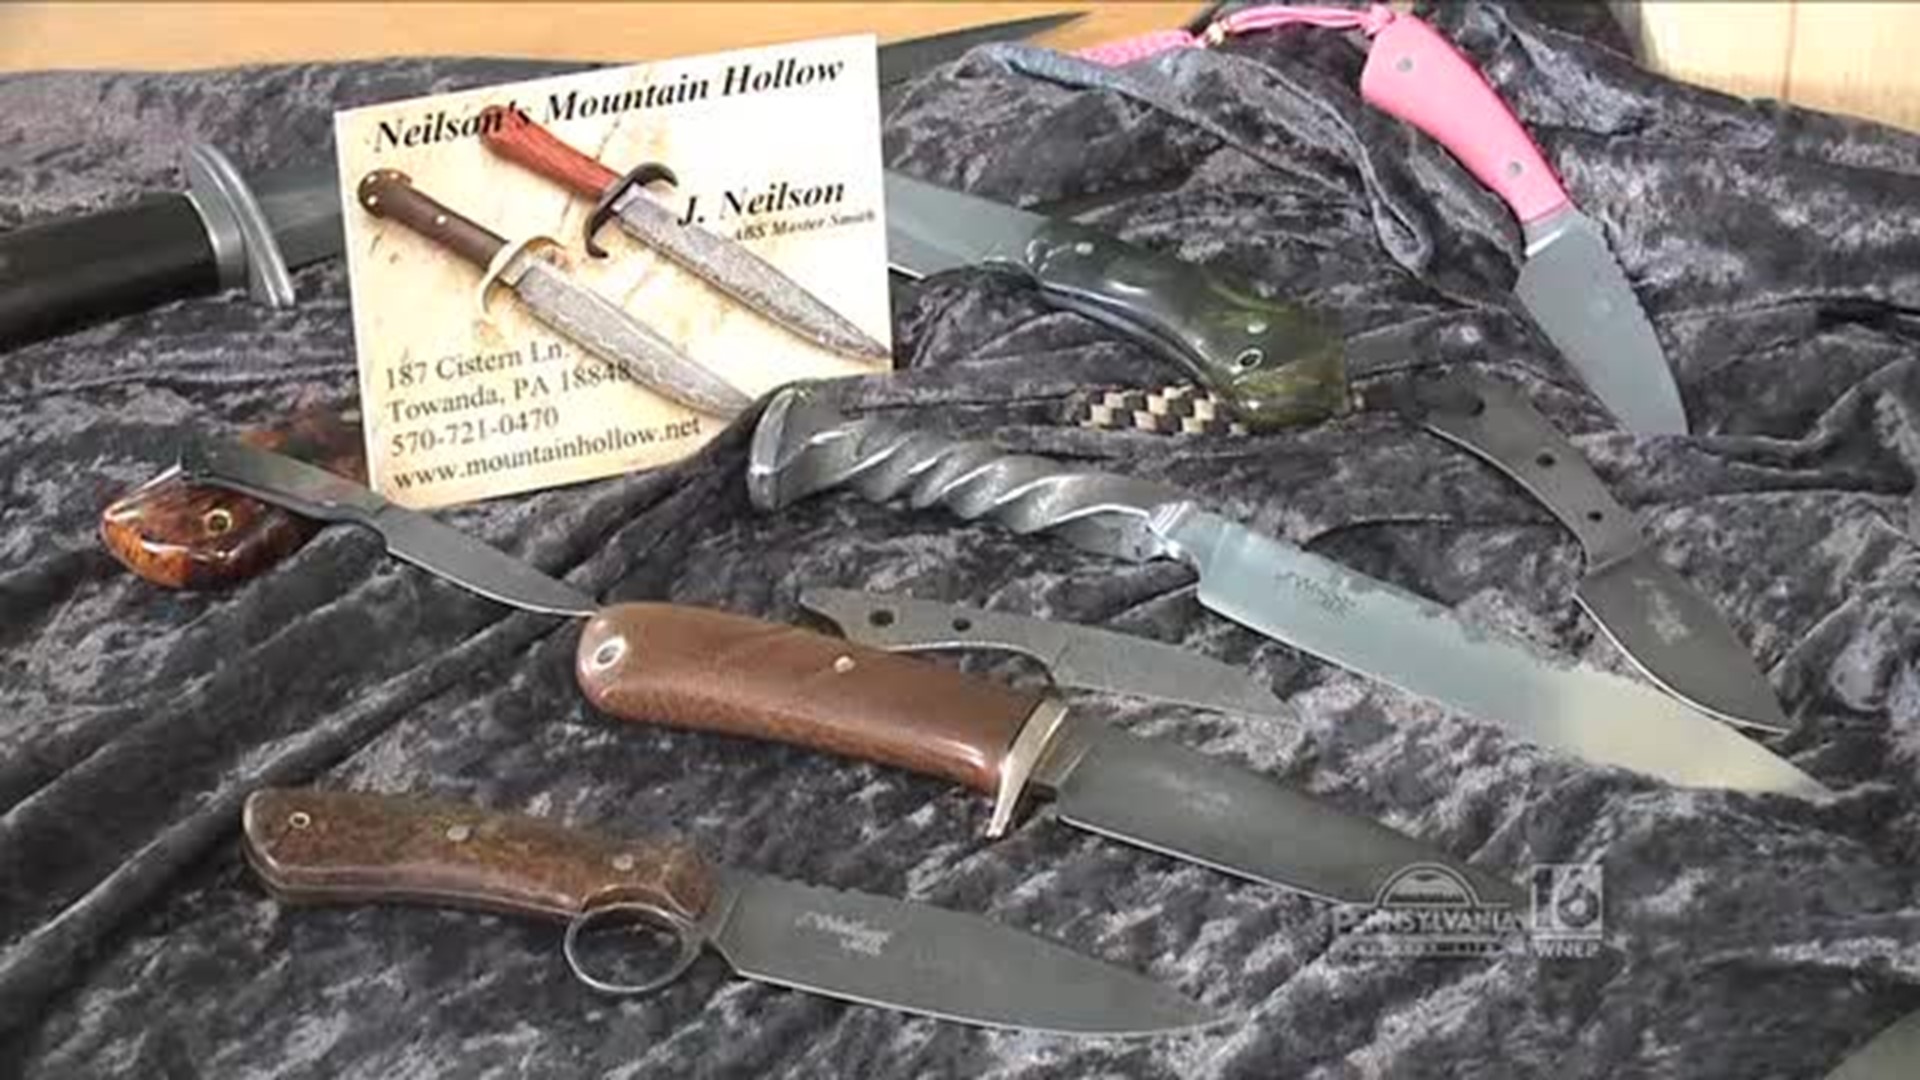 Neilson's Mountain Hollow Knife Making